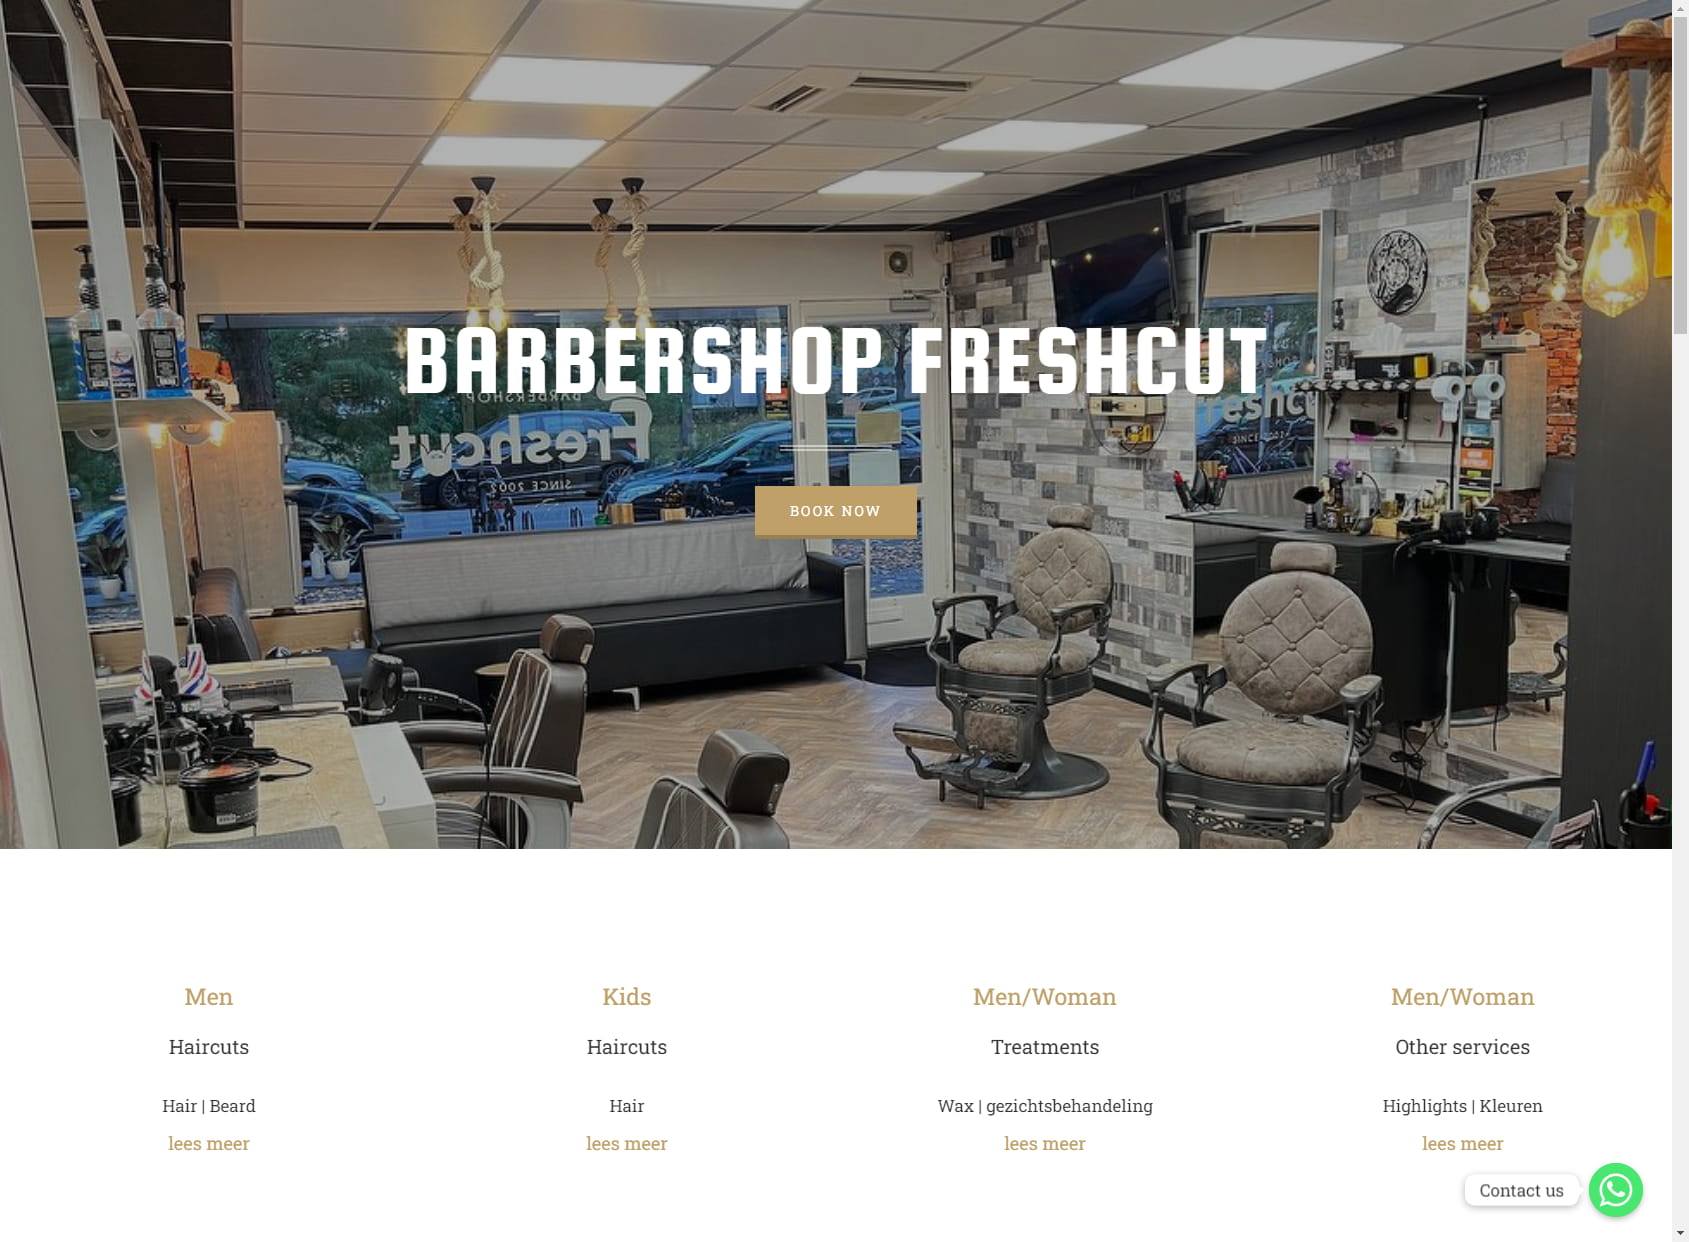 Barbershop Freshcut